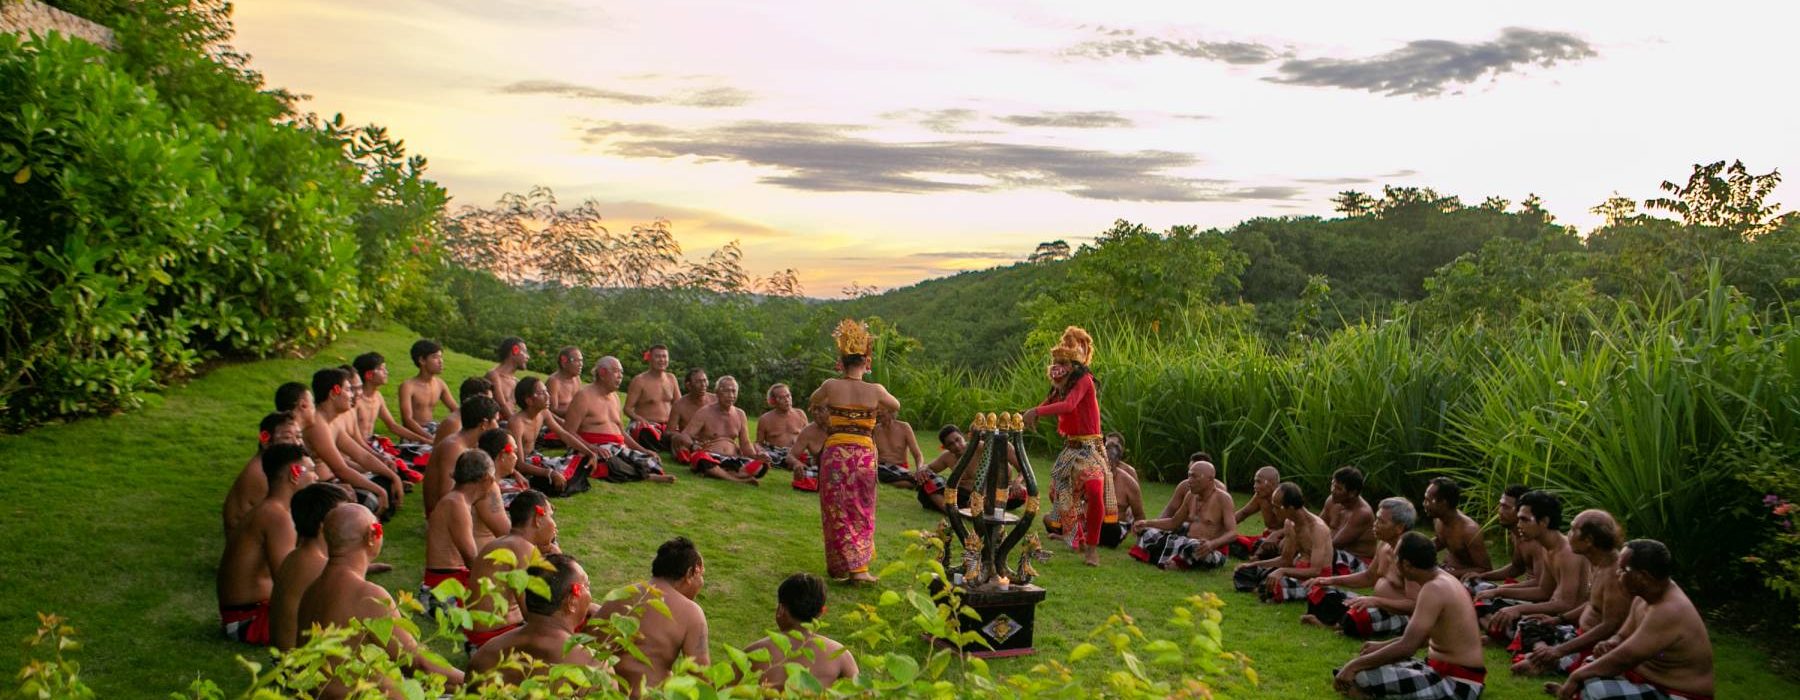 Raffles Bali - The Kecak Dance: A Mesmerizing Performance in Bali